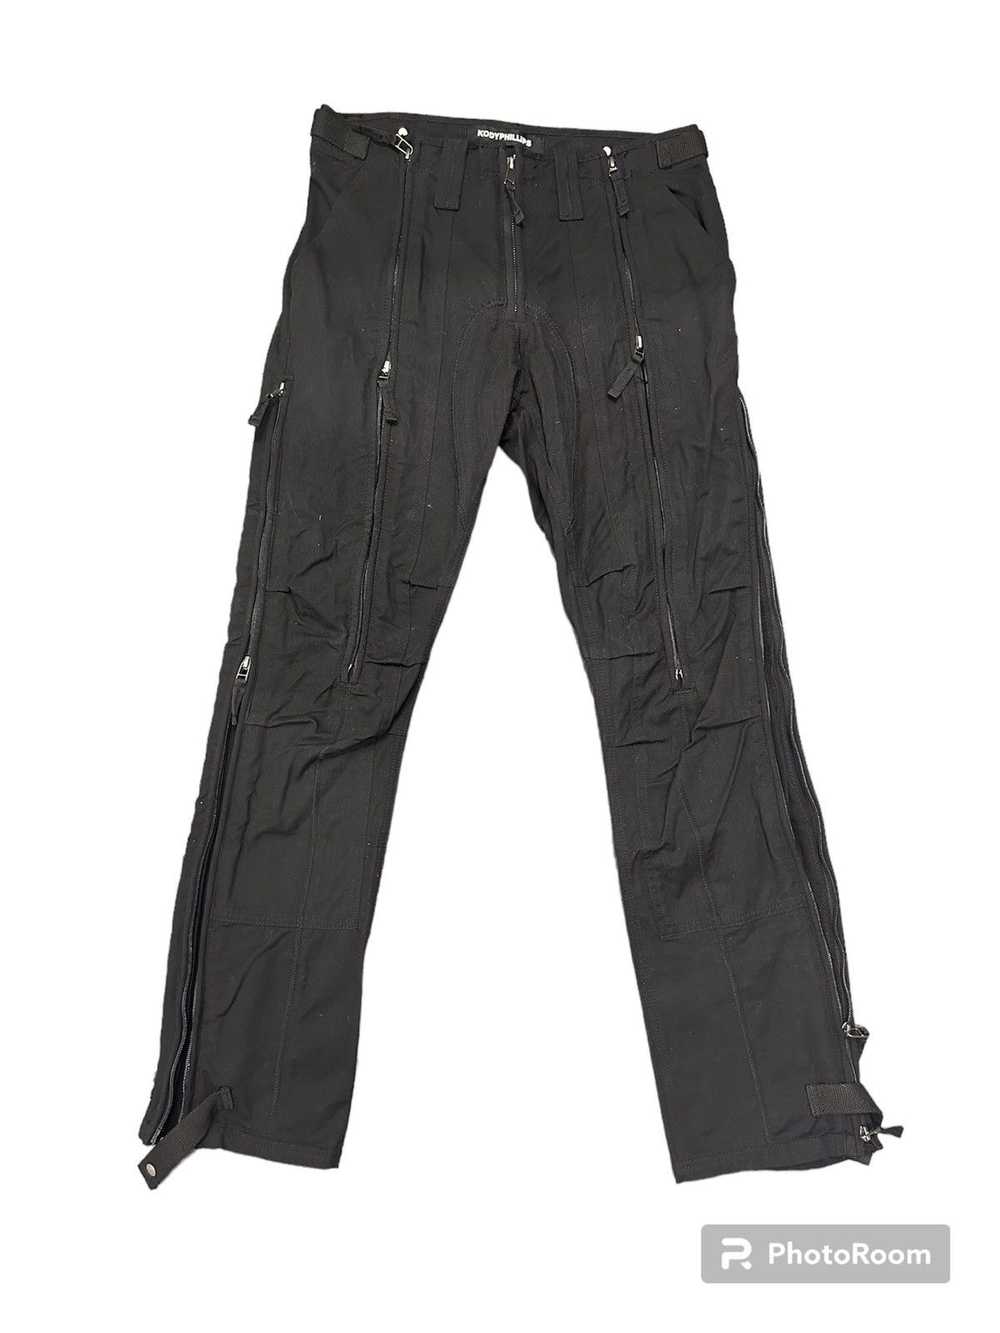 Kody Phillips Kody Phillips zipper pants size 30 - image 1